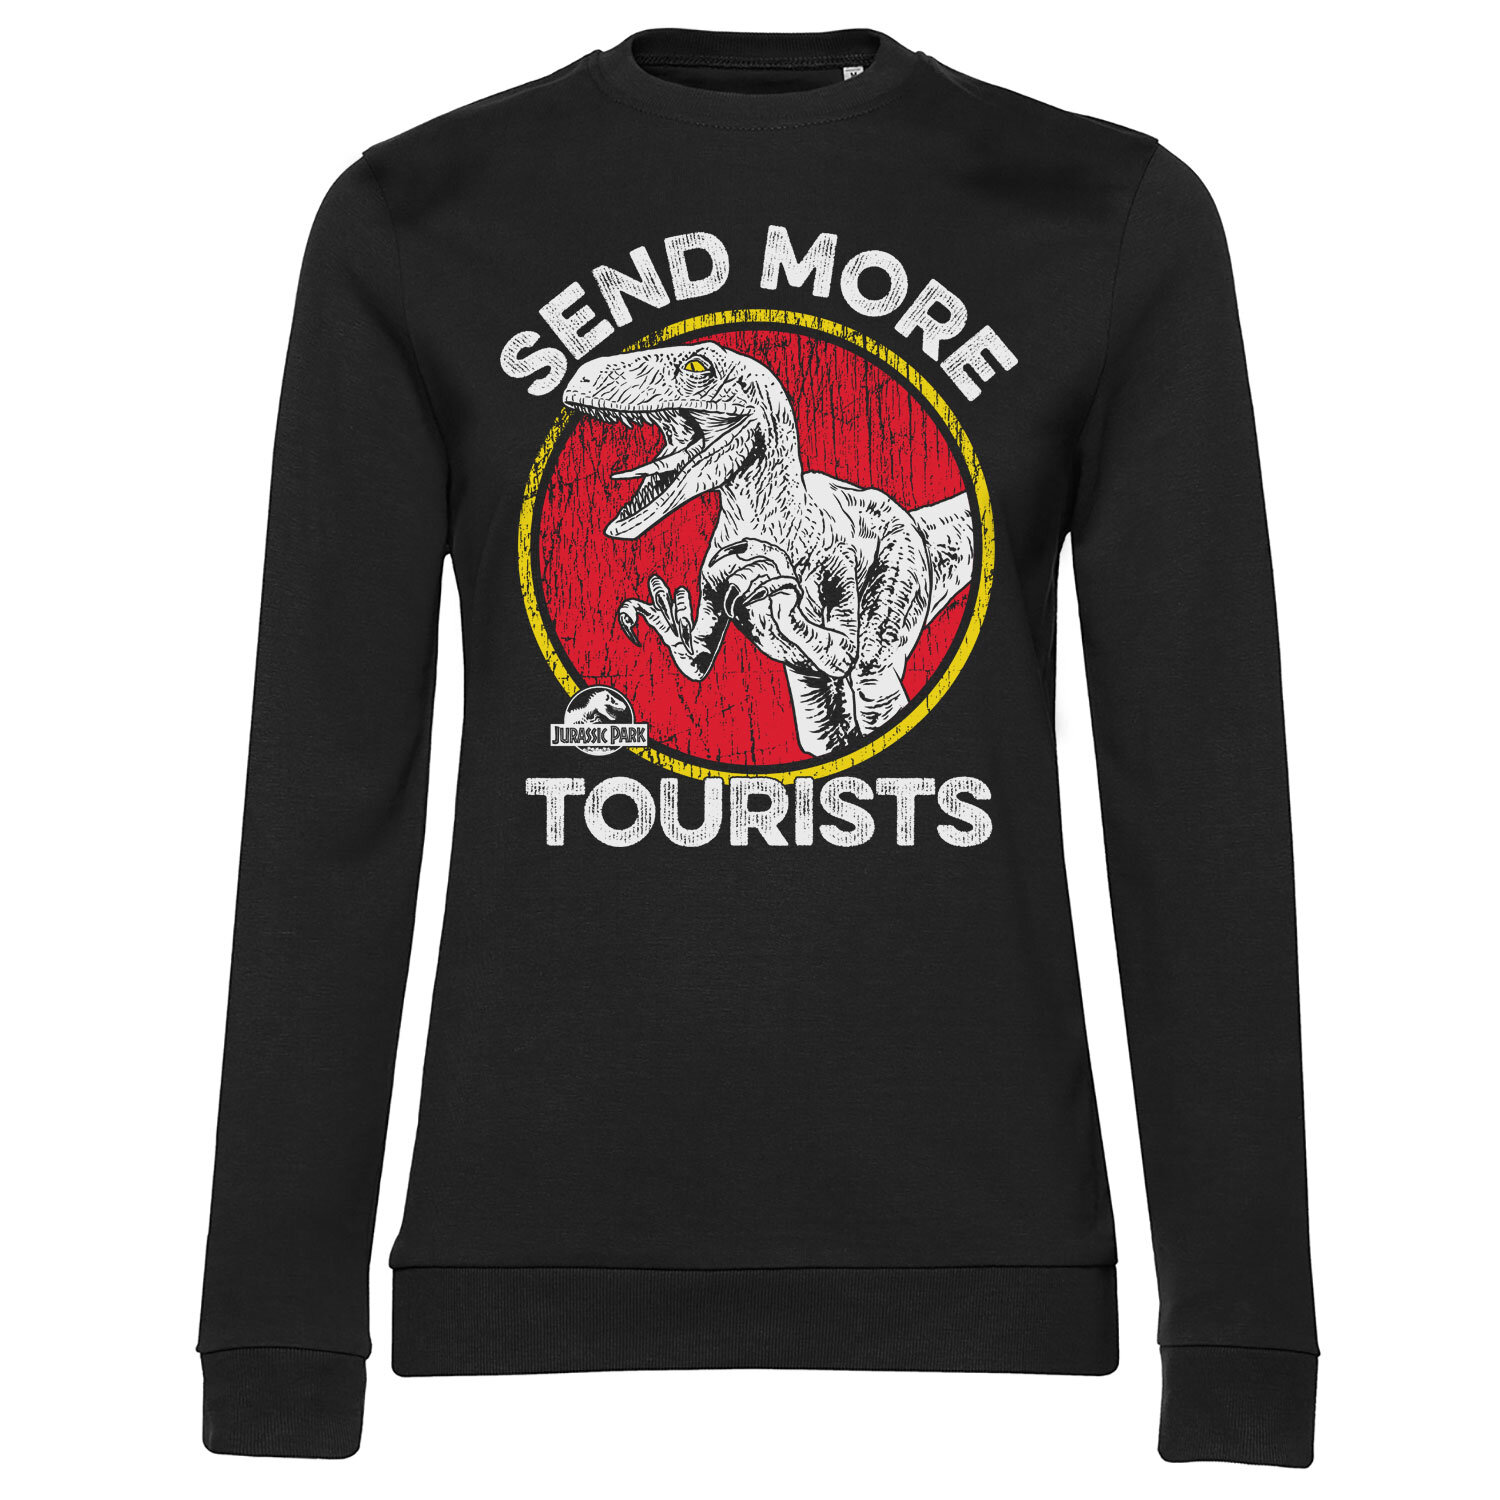 Jurassic Park - Send More Tourists Girly Sweatshirt